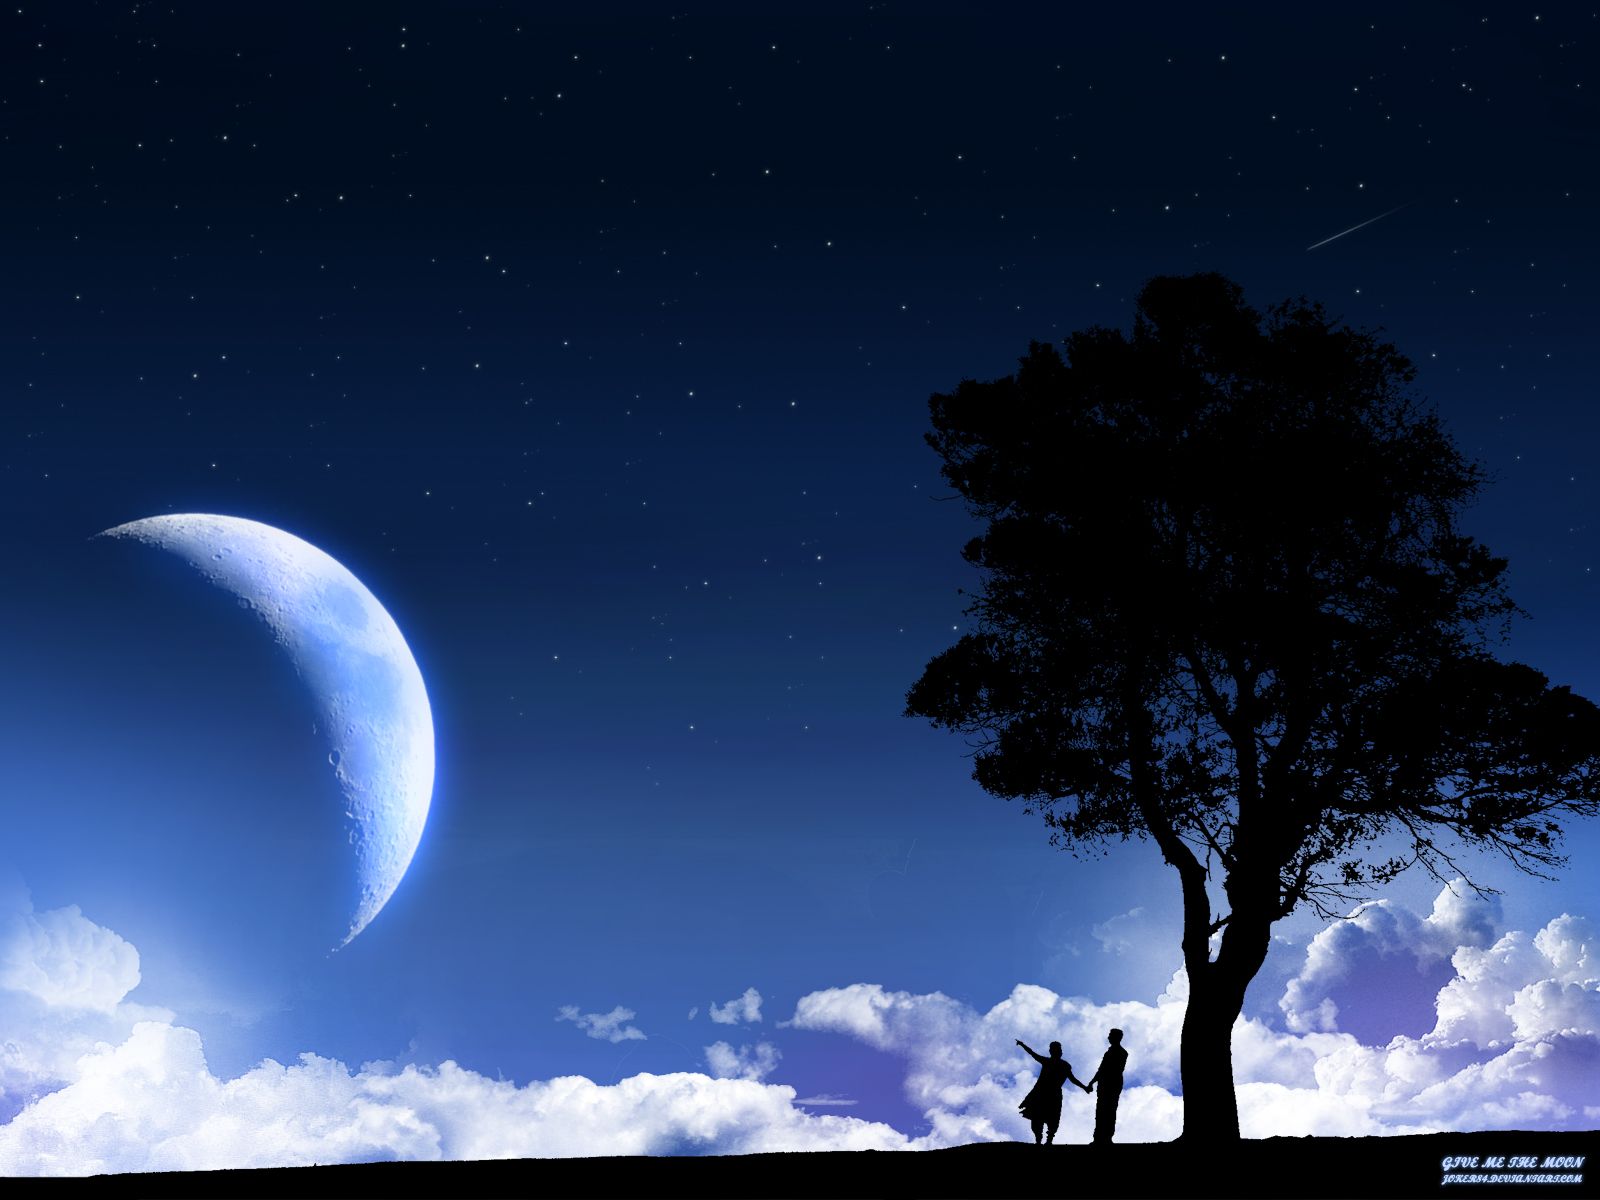 Download wallpaper: night, moon, wallpaper for desktop, Love, , tree